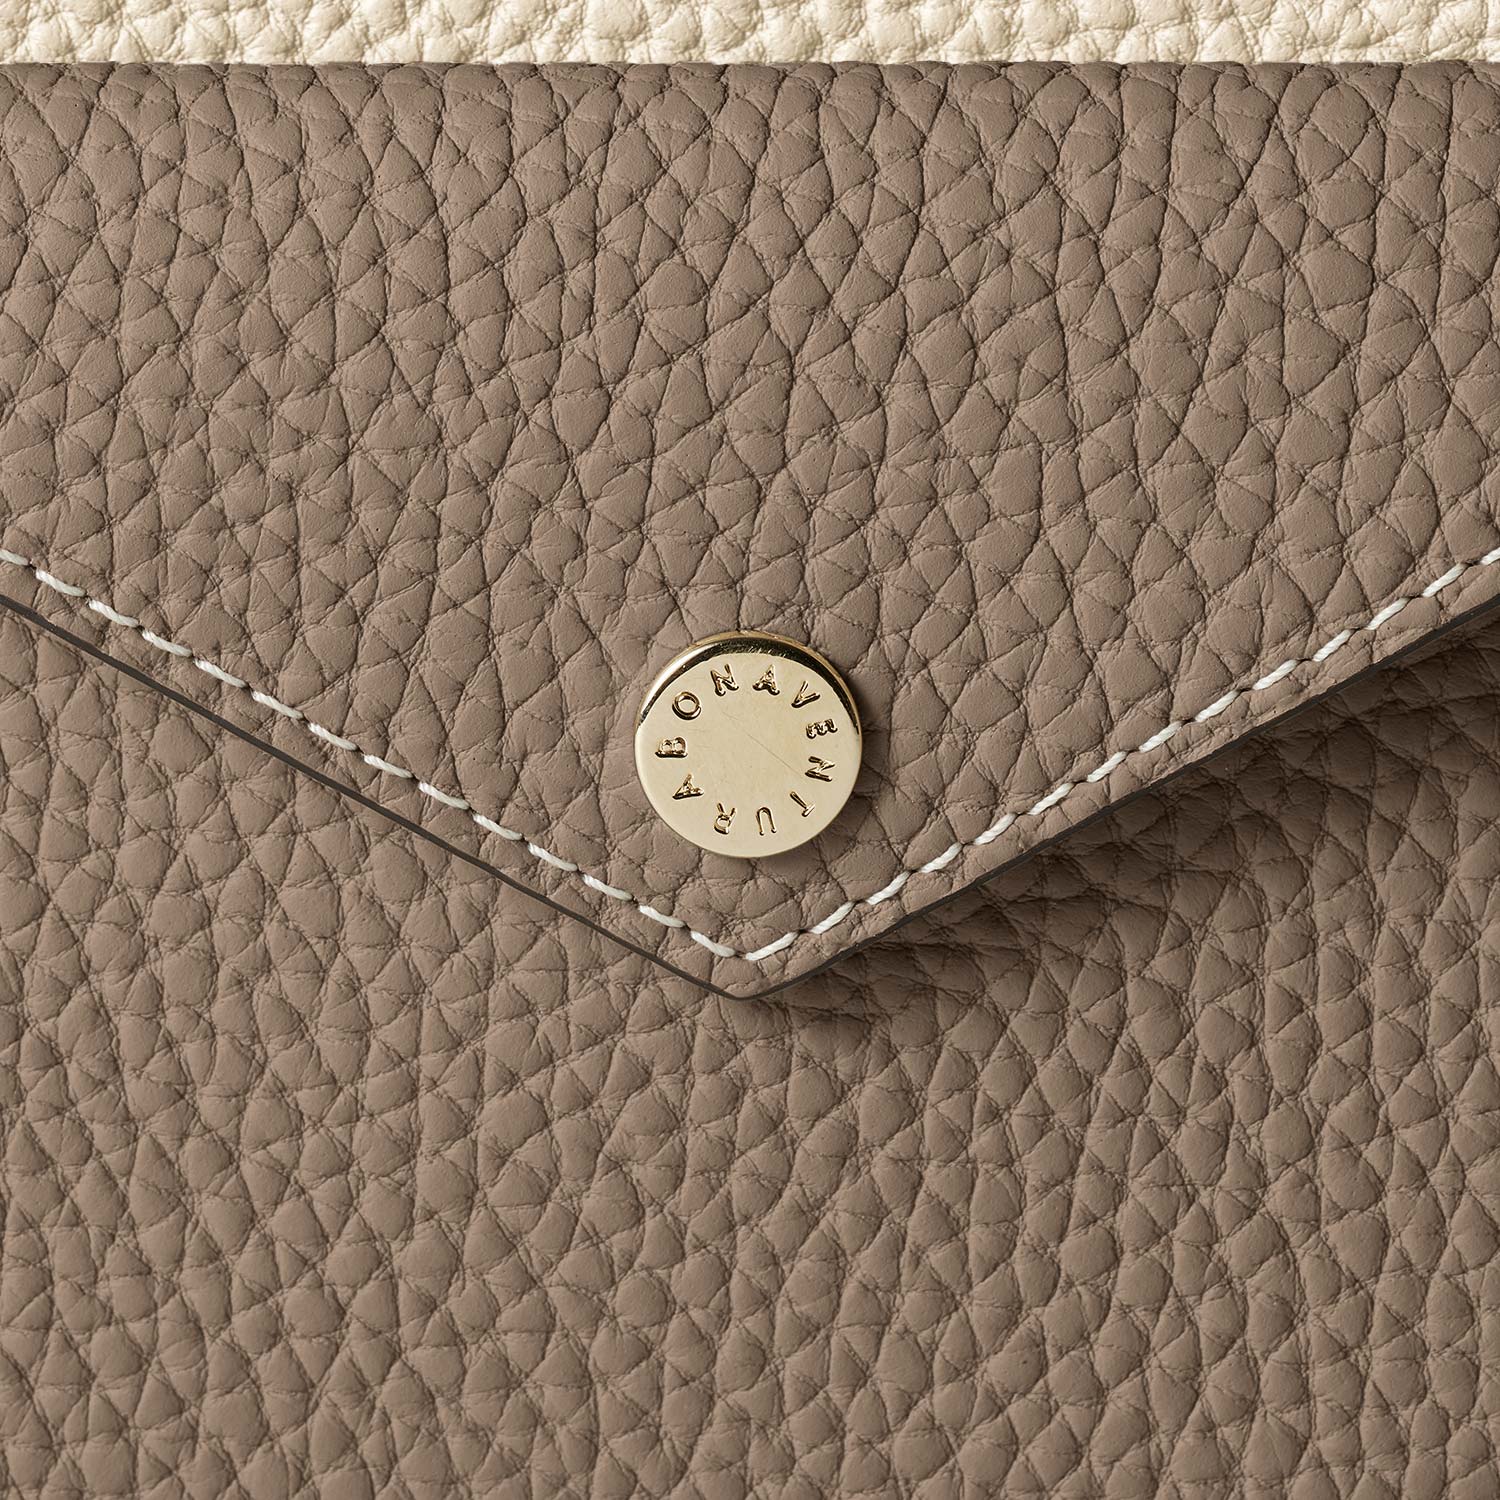 Envelope mini zip wallet in shrunk leather